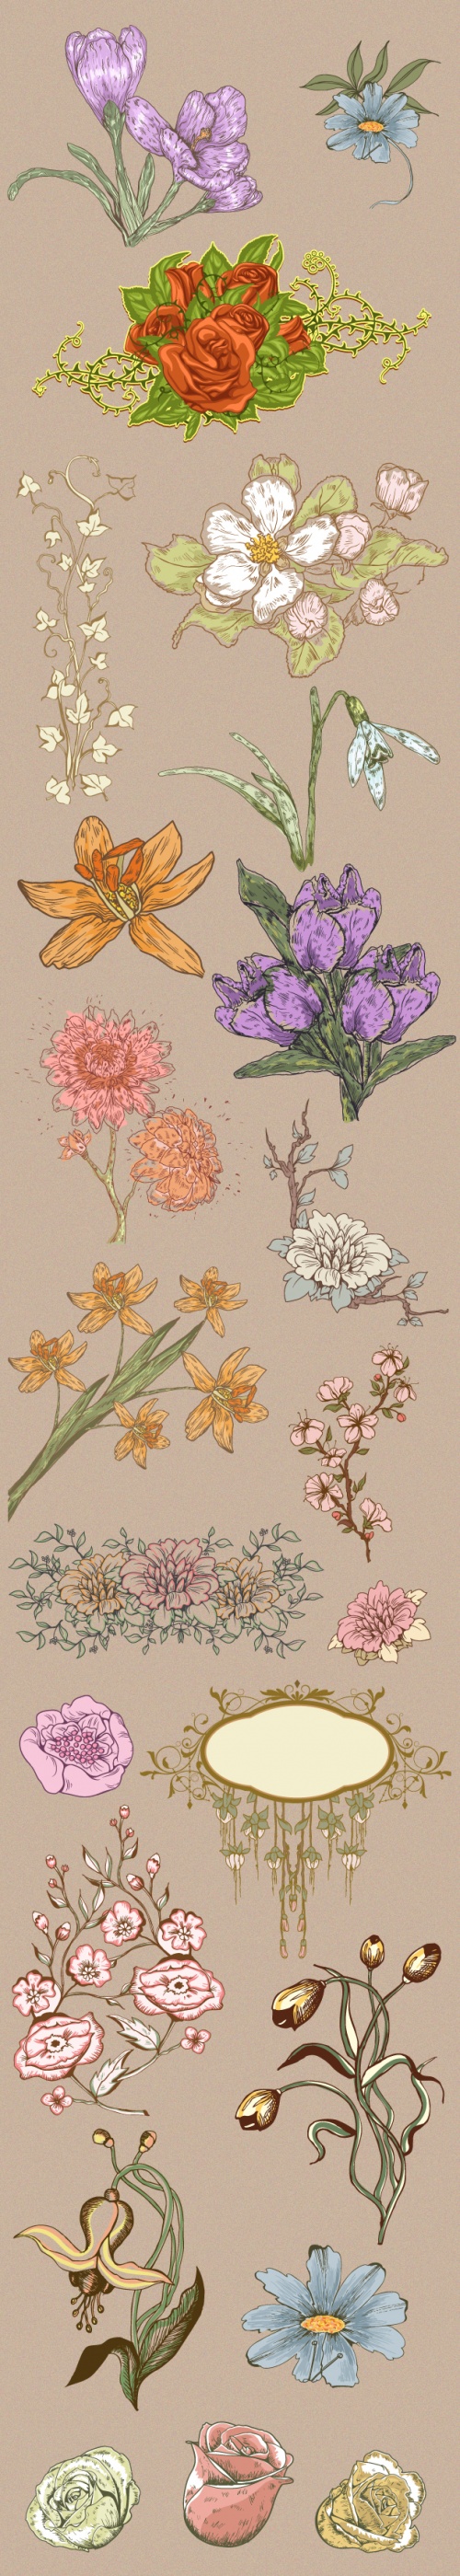 Designtnt - Floral Ornaments Set 3